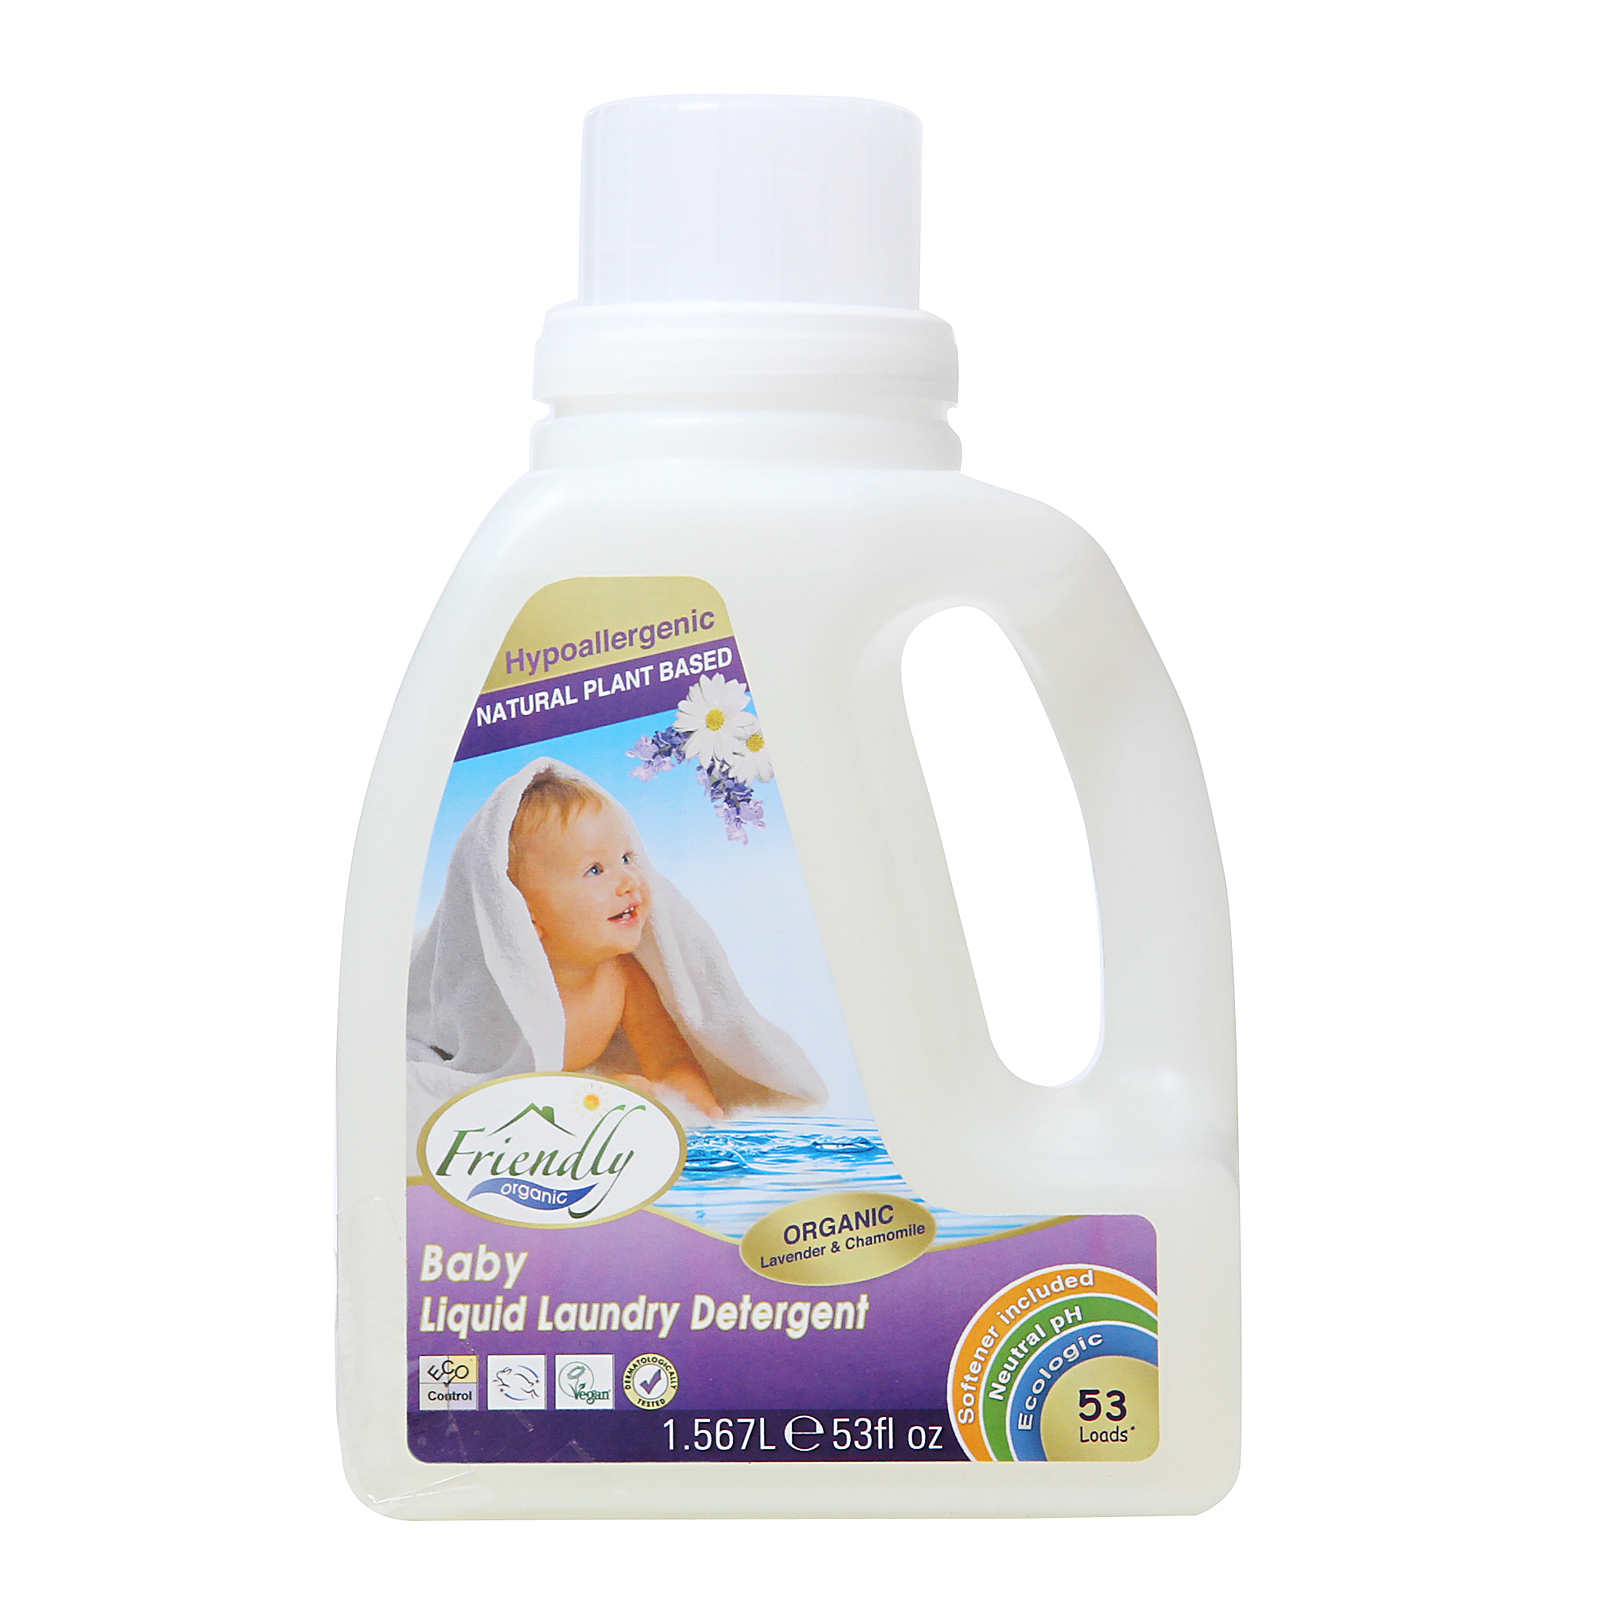 Friendly Organics Baby Liquid Laundry Detergent - 1.5L